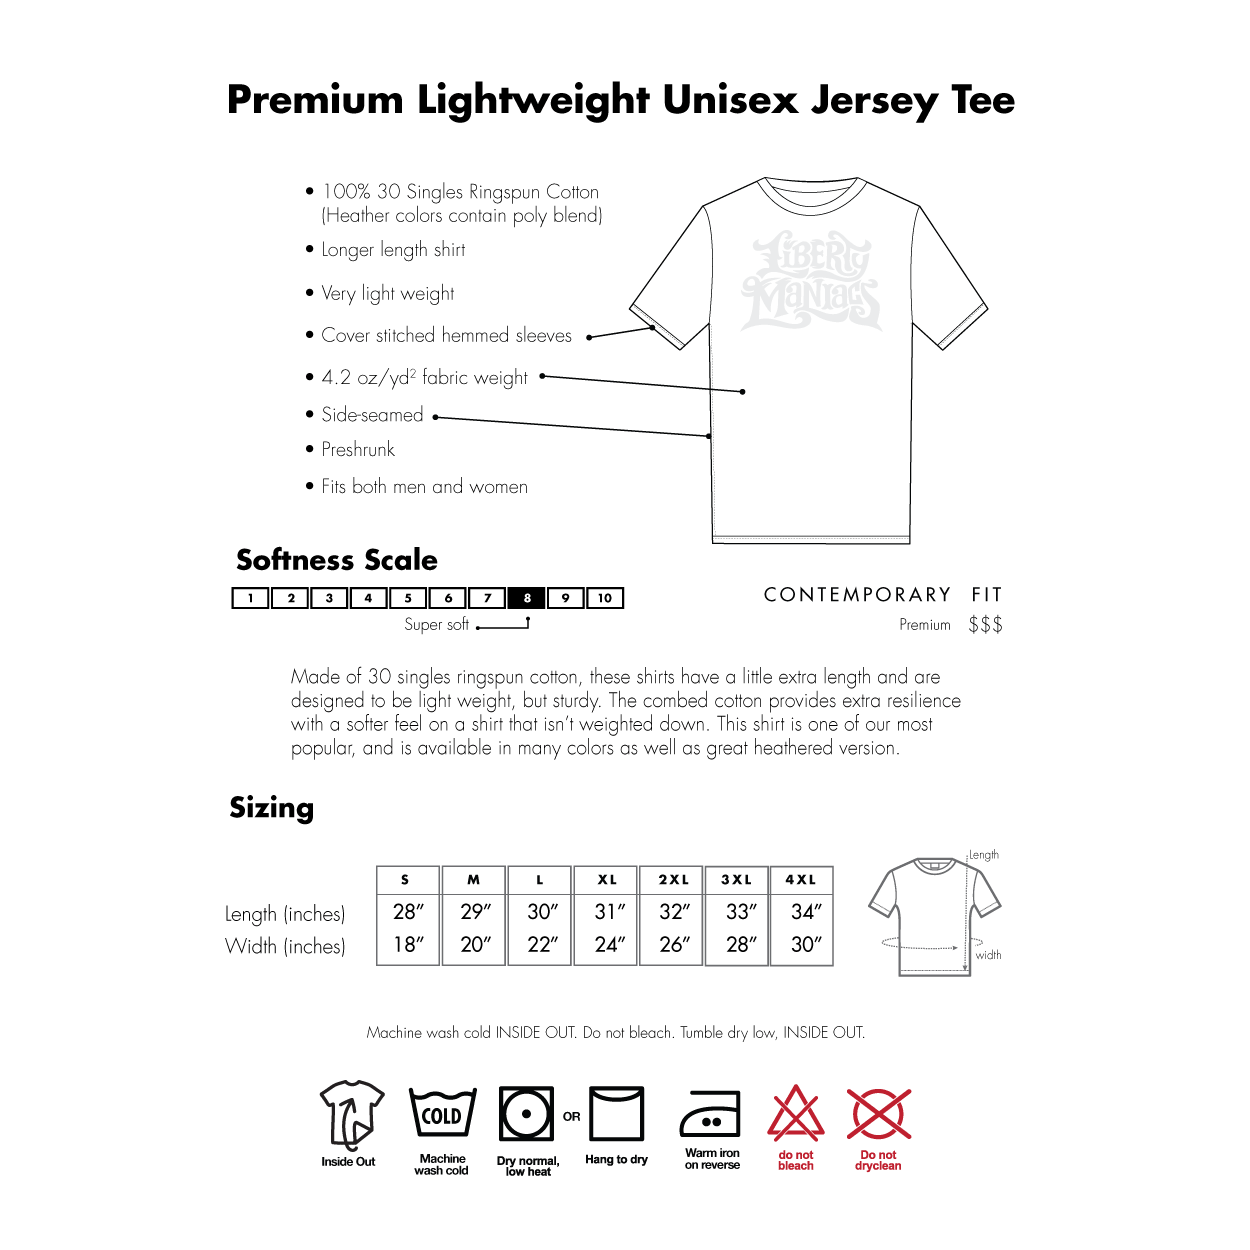 Organize Fish Short-Sleeve Unisex T-Shirt